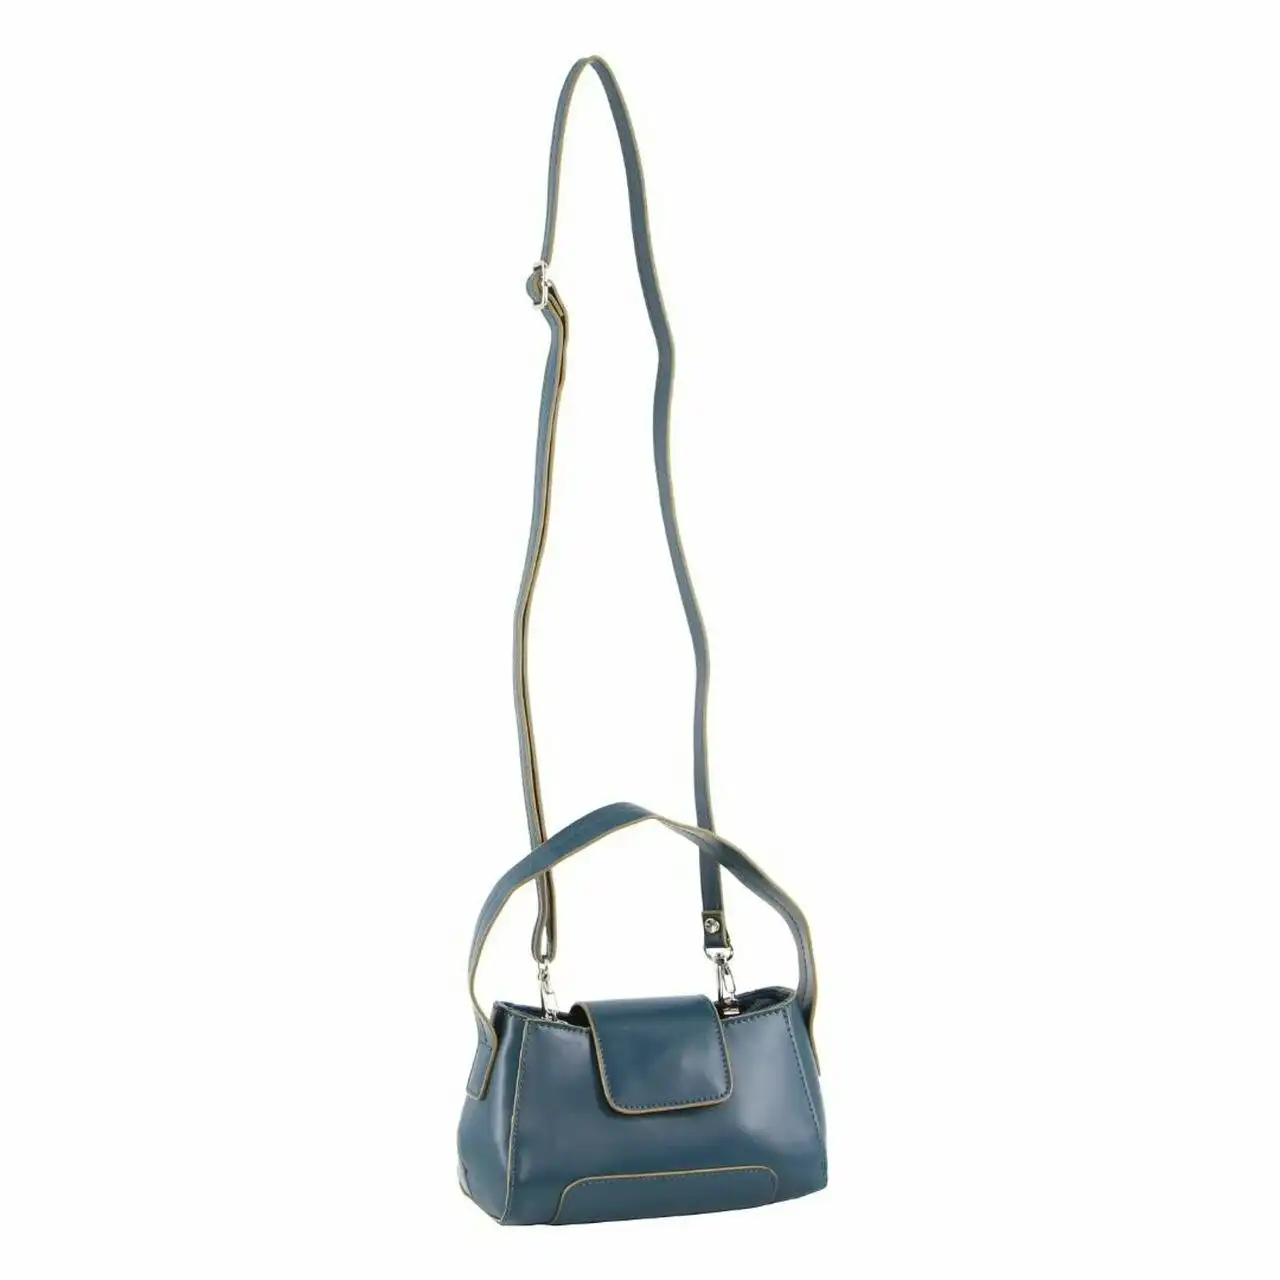 Milleni Mini Fashion Womens/Ladies 20cm Tote Hand Bag Work Shoulder Handbag Teal